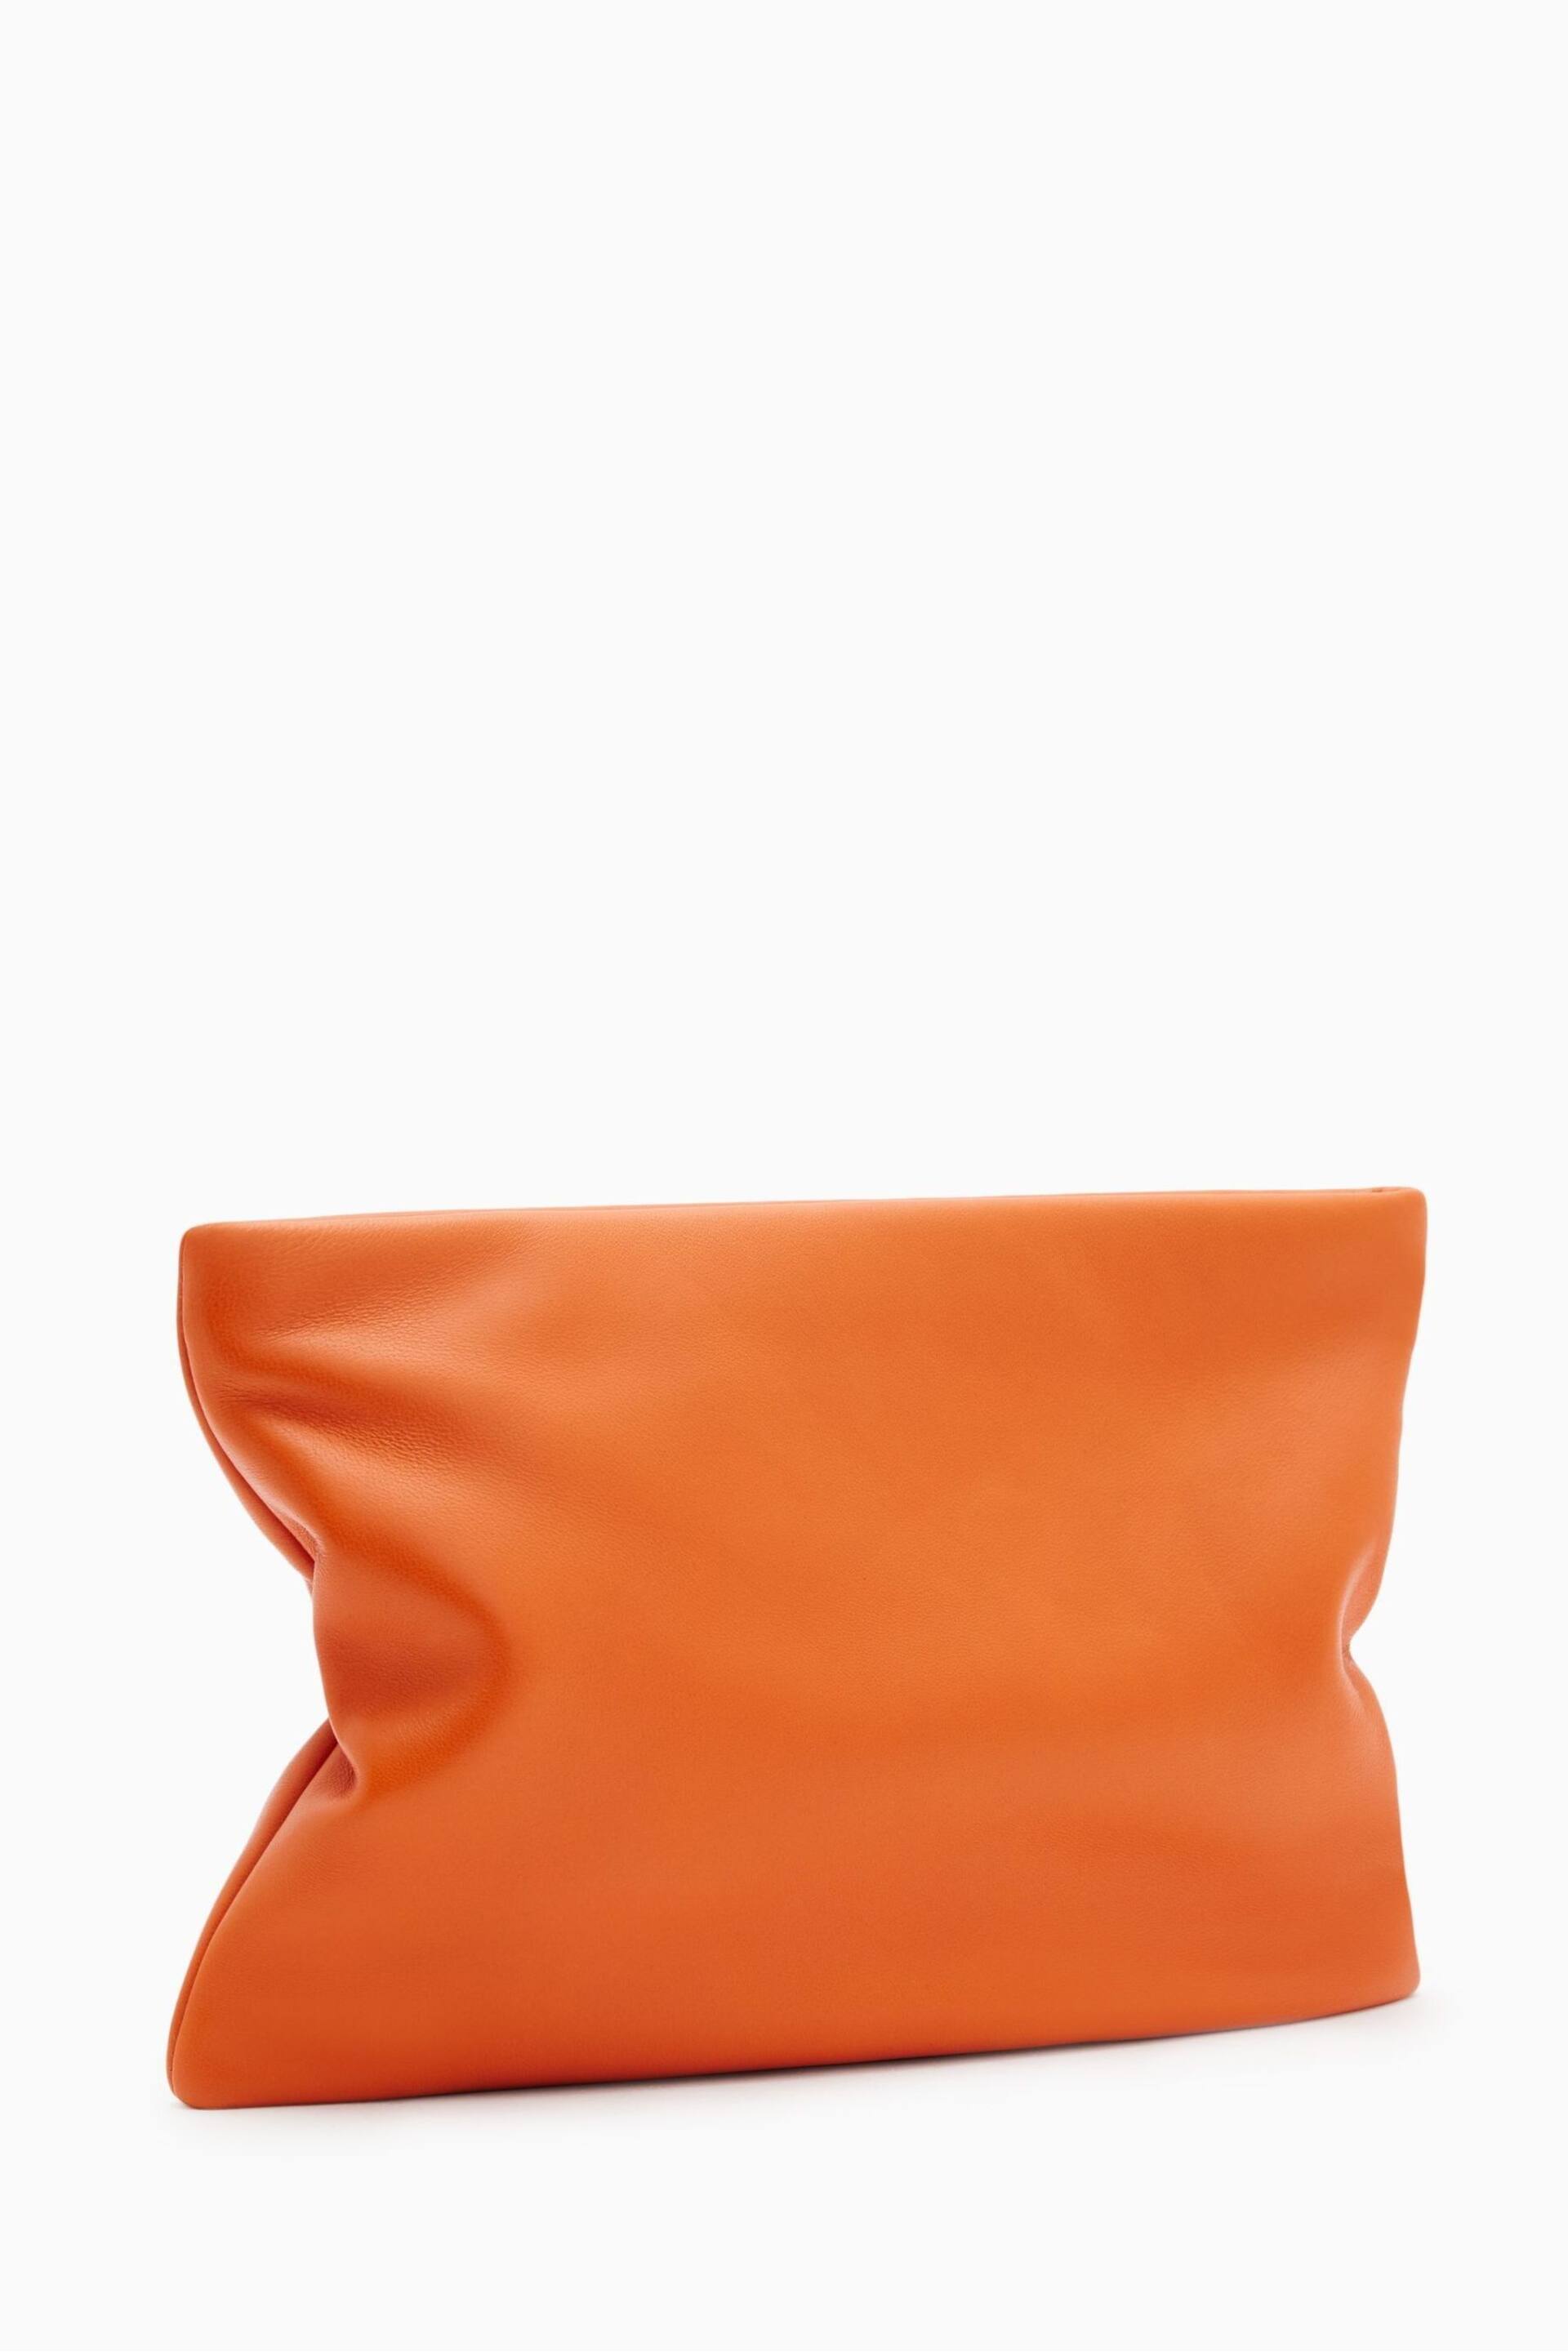 AllSaints Orange Bettina Clutch - Image 3 of 6